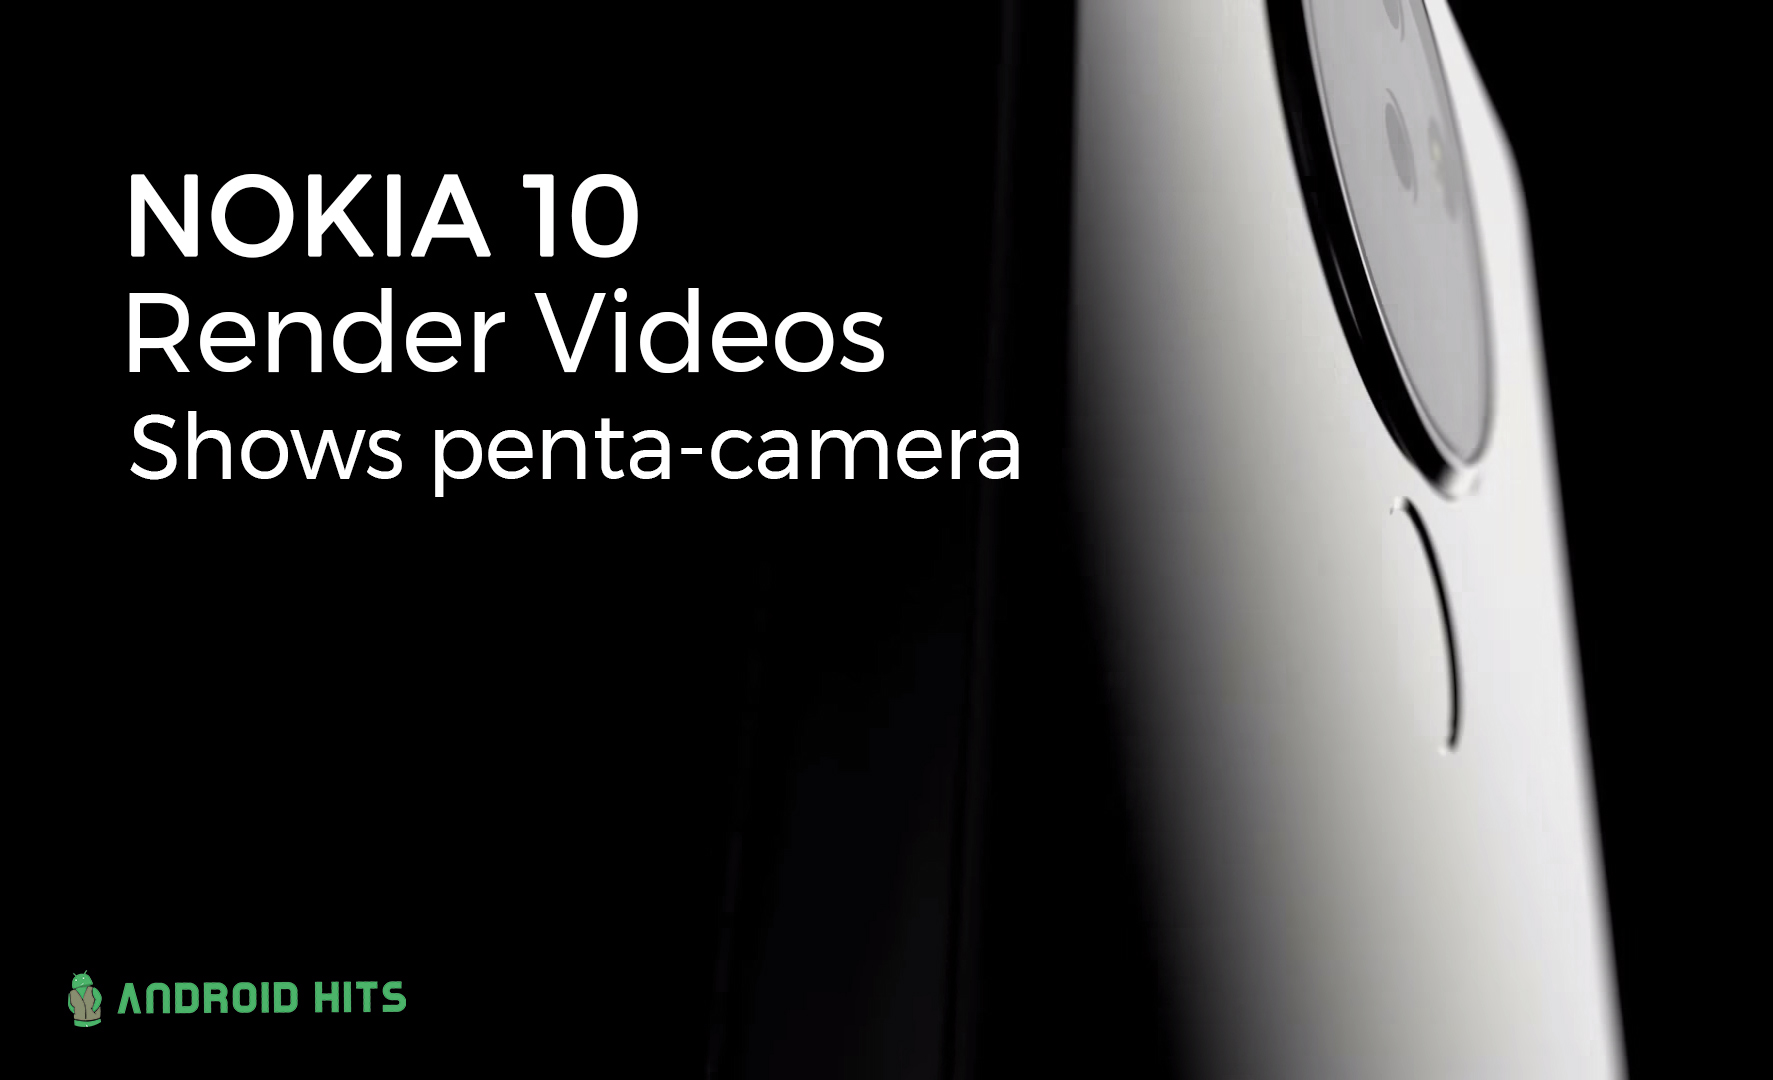 Nokia 10: concept render videos show the smartphone in wild 2